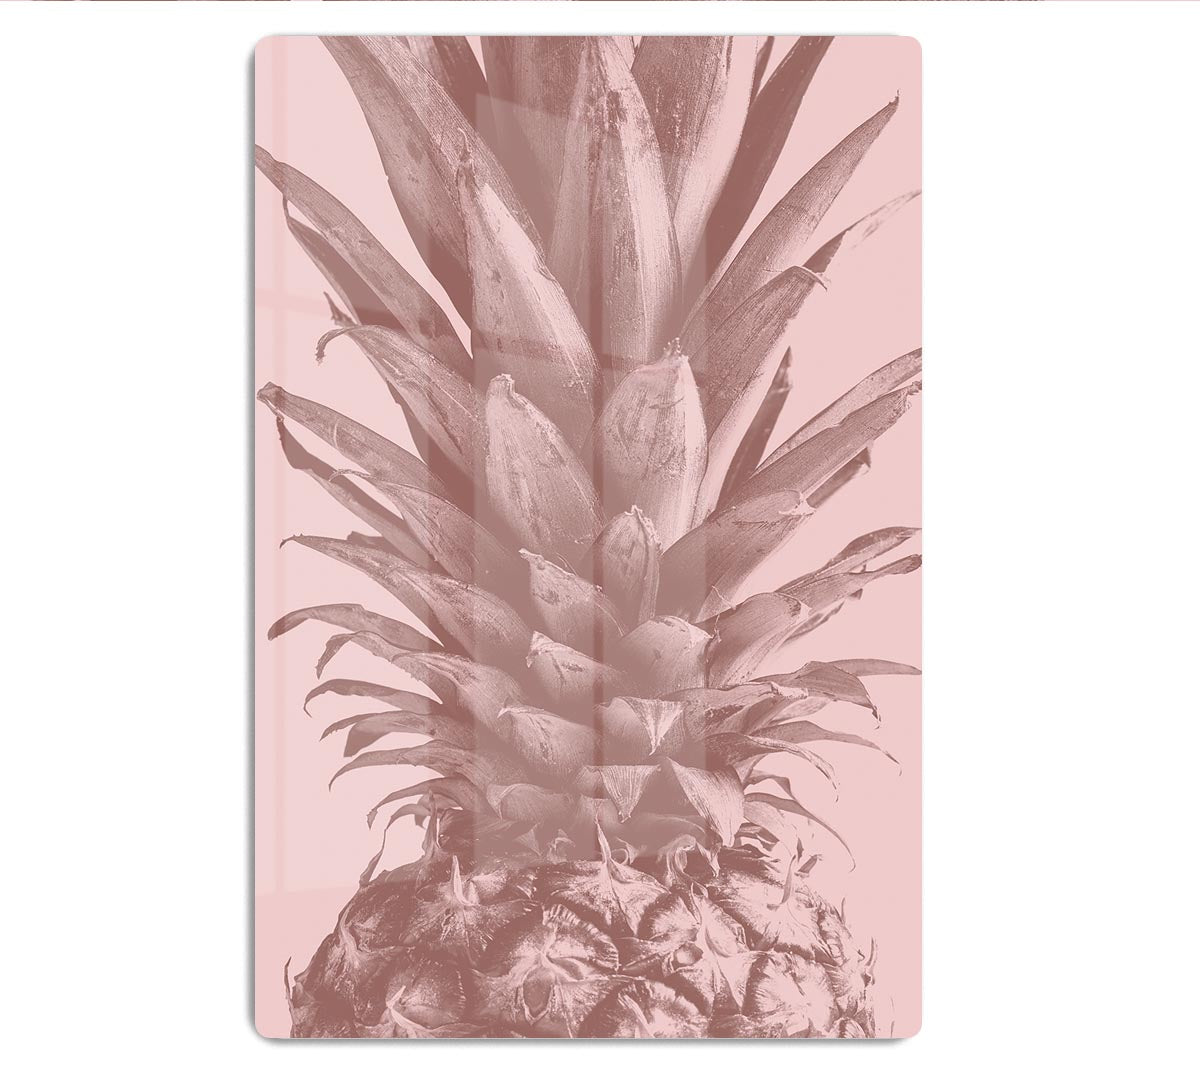 Pineapple Close Up 01 HD Metal Print - Canvas Art Rocks - 1